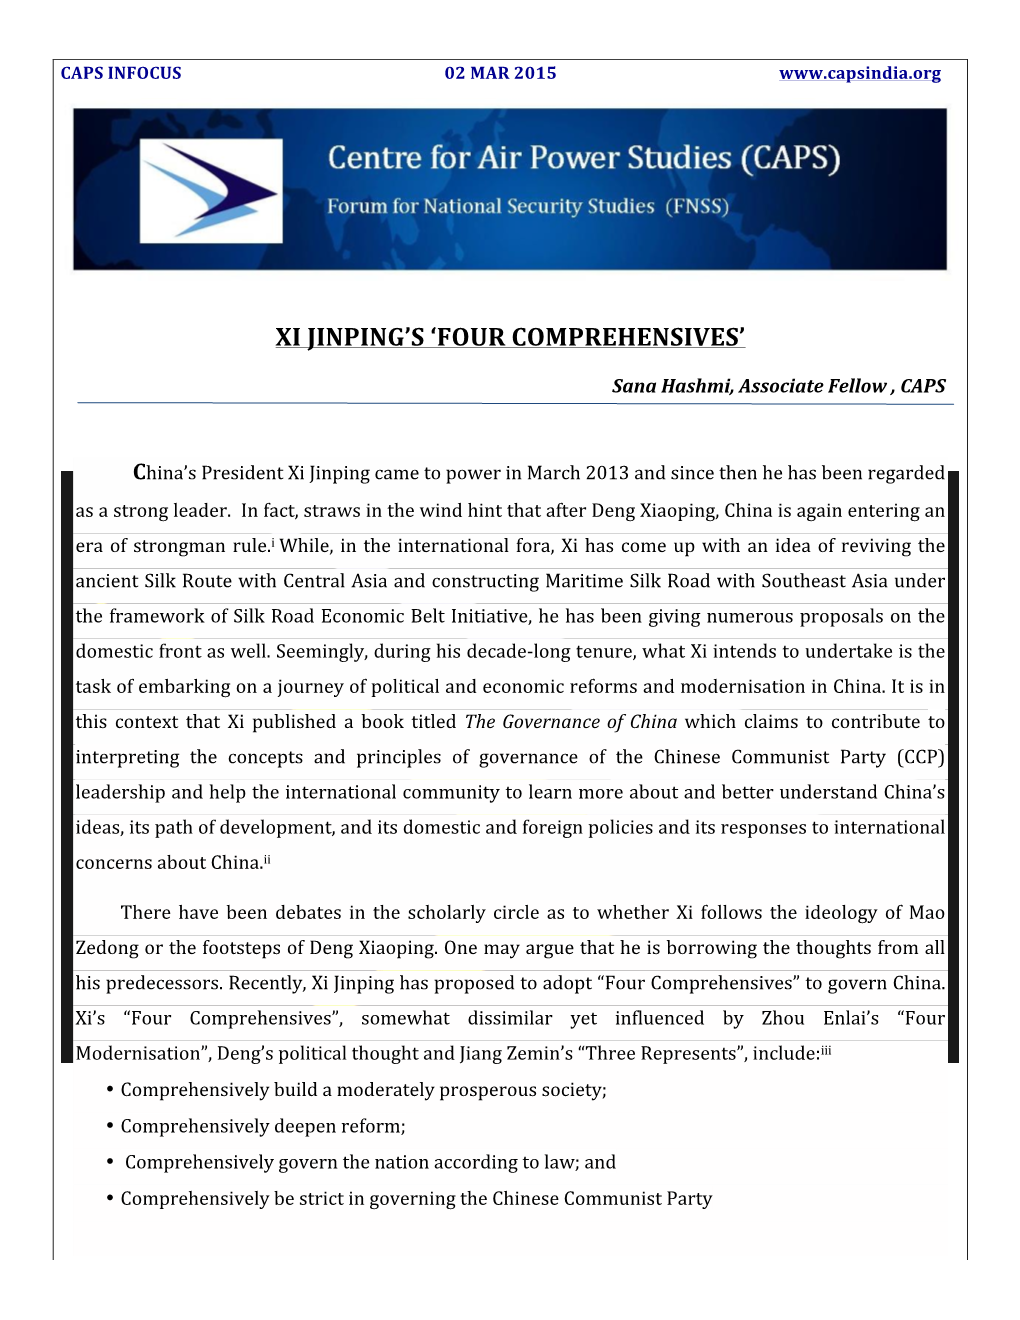 Xi Jinping's 'Four Comprehensives'